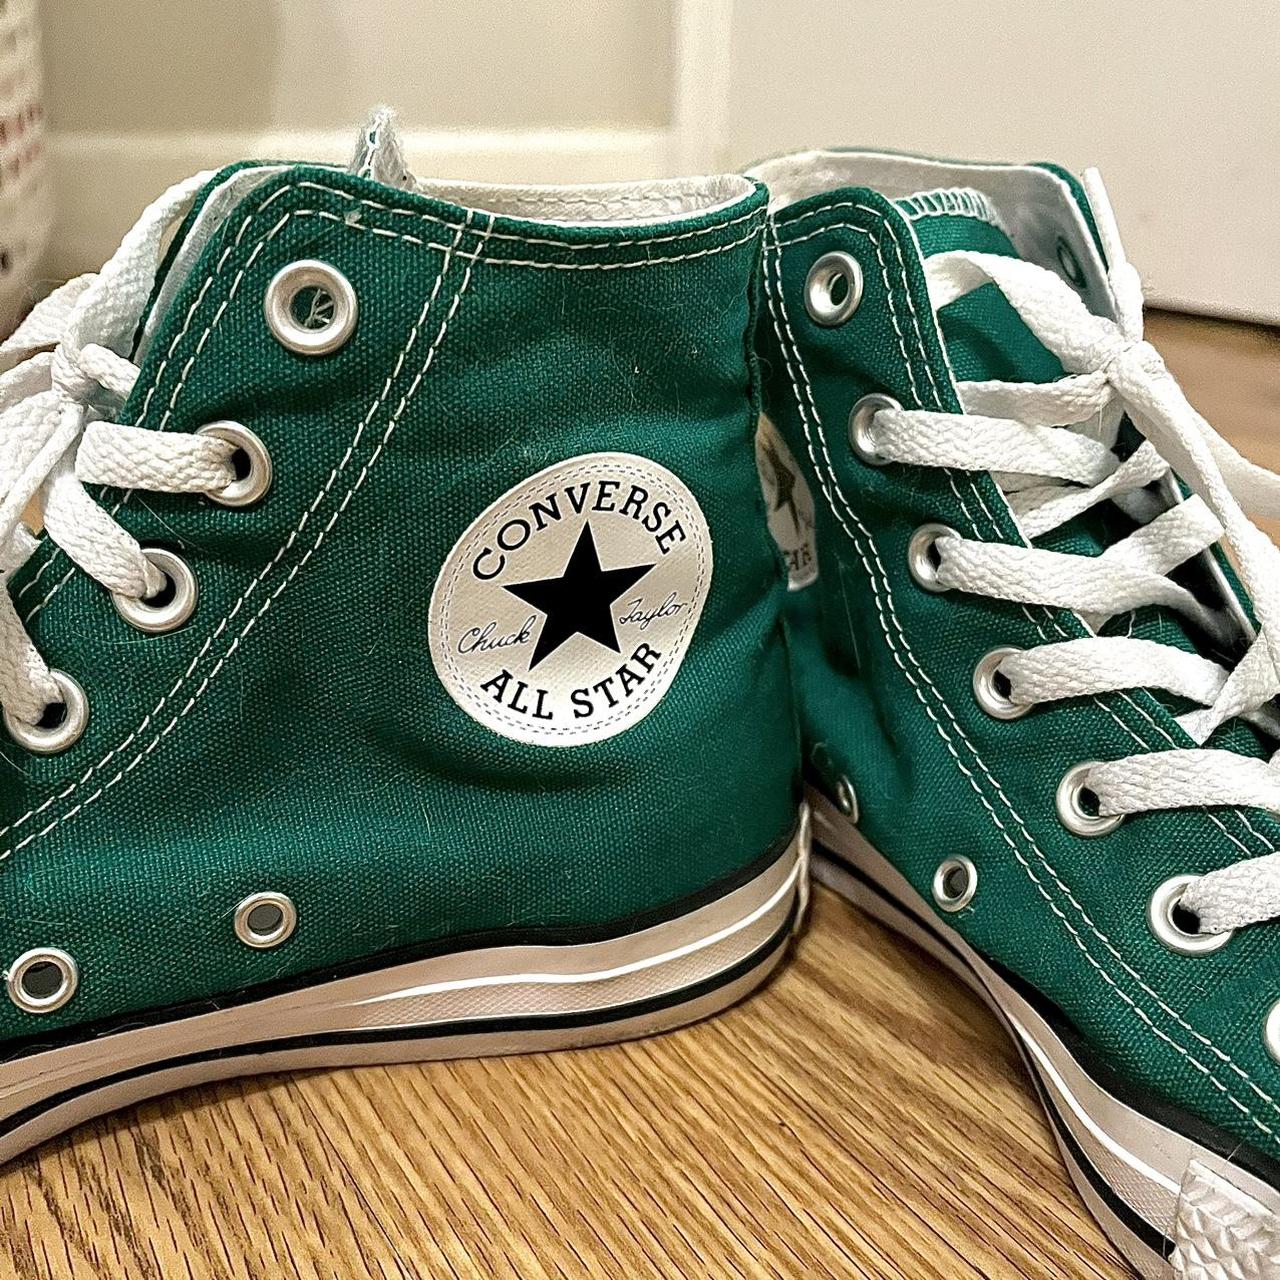 high chuck green converse , size 7 1/2 , great